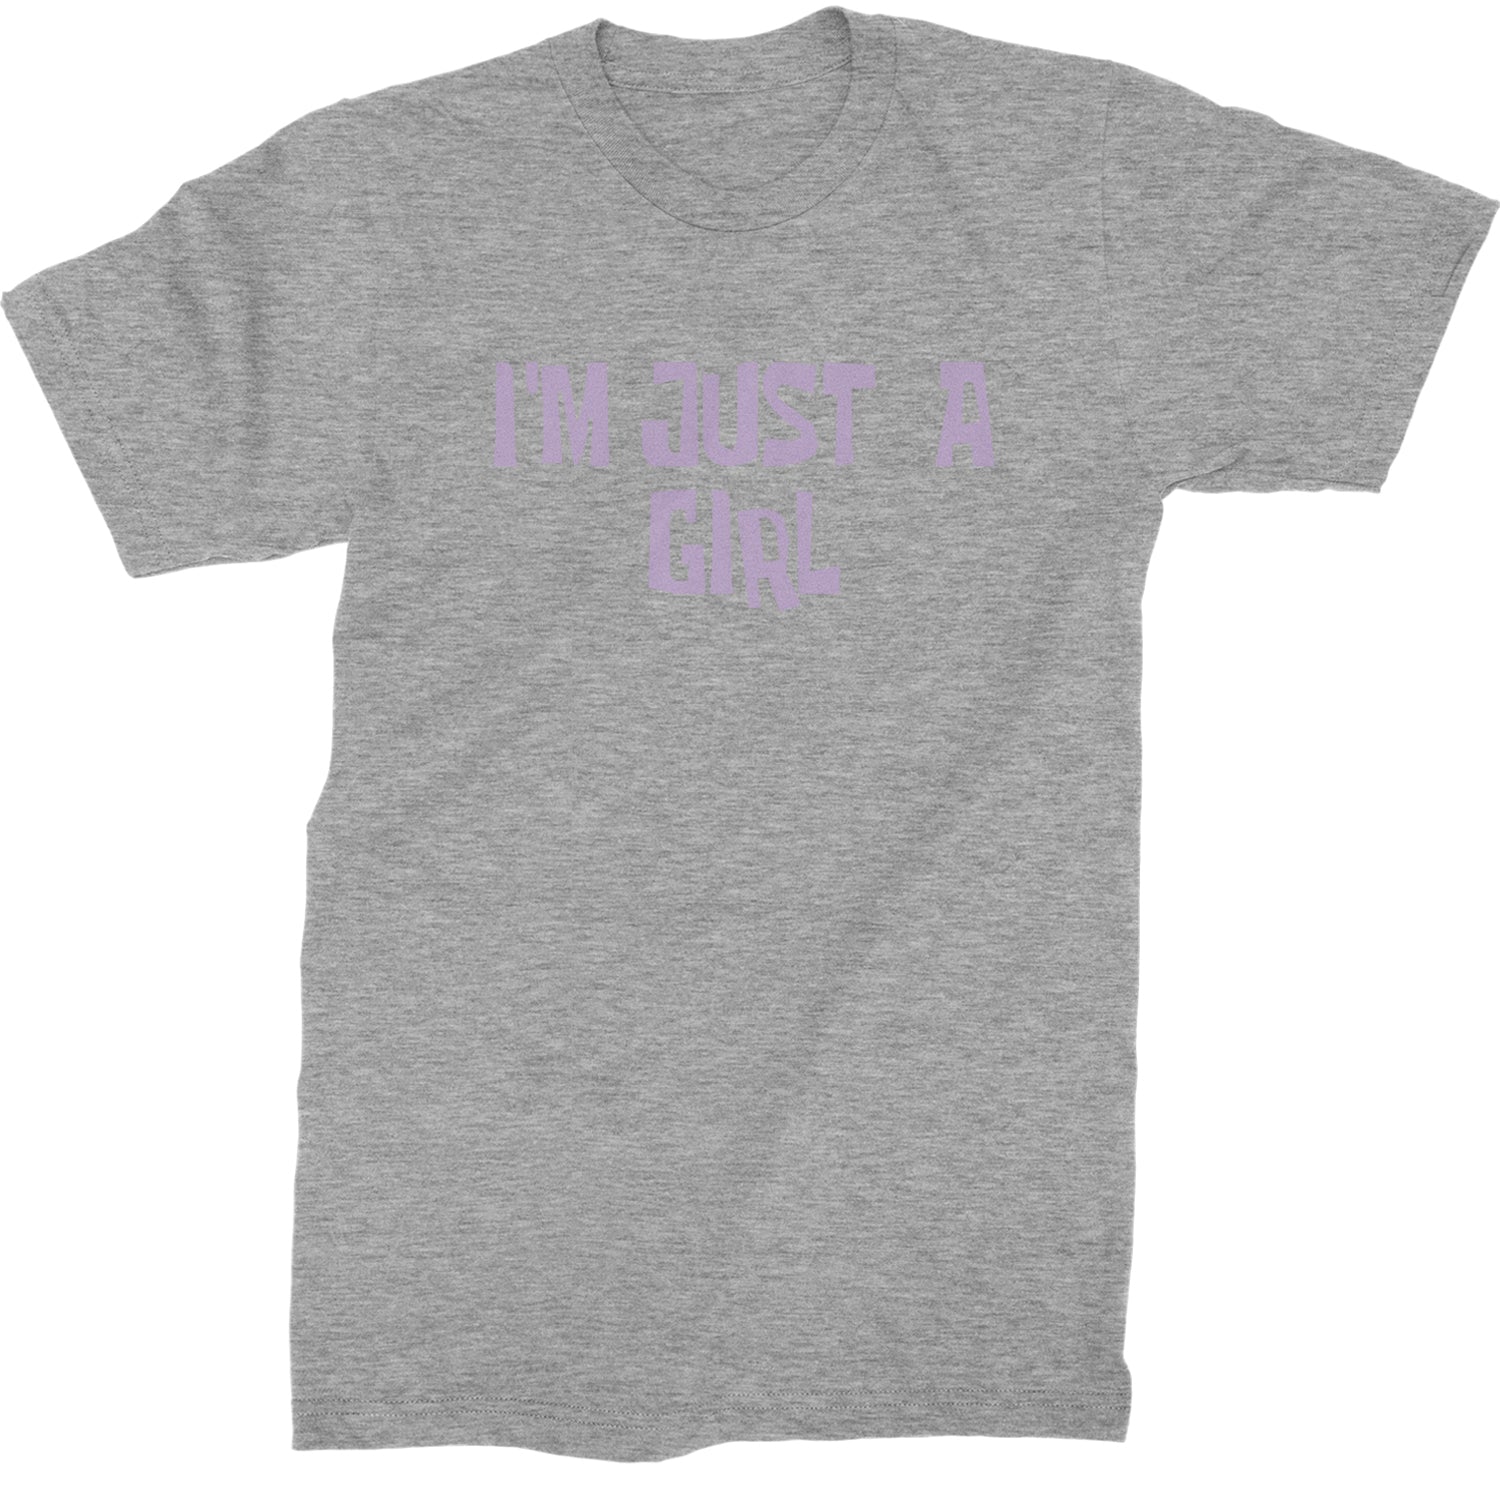 I'm Just A Girl Guts Music Mens T-shirt Heather Grey